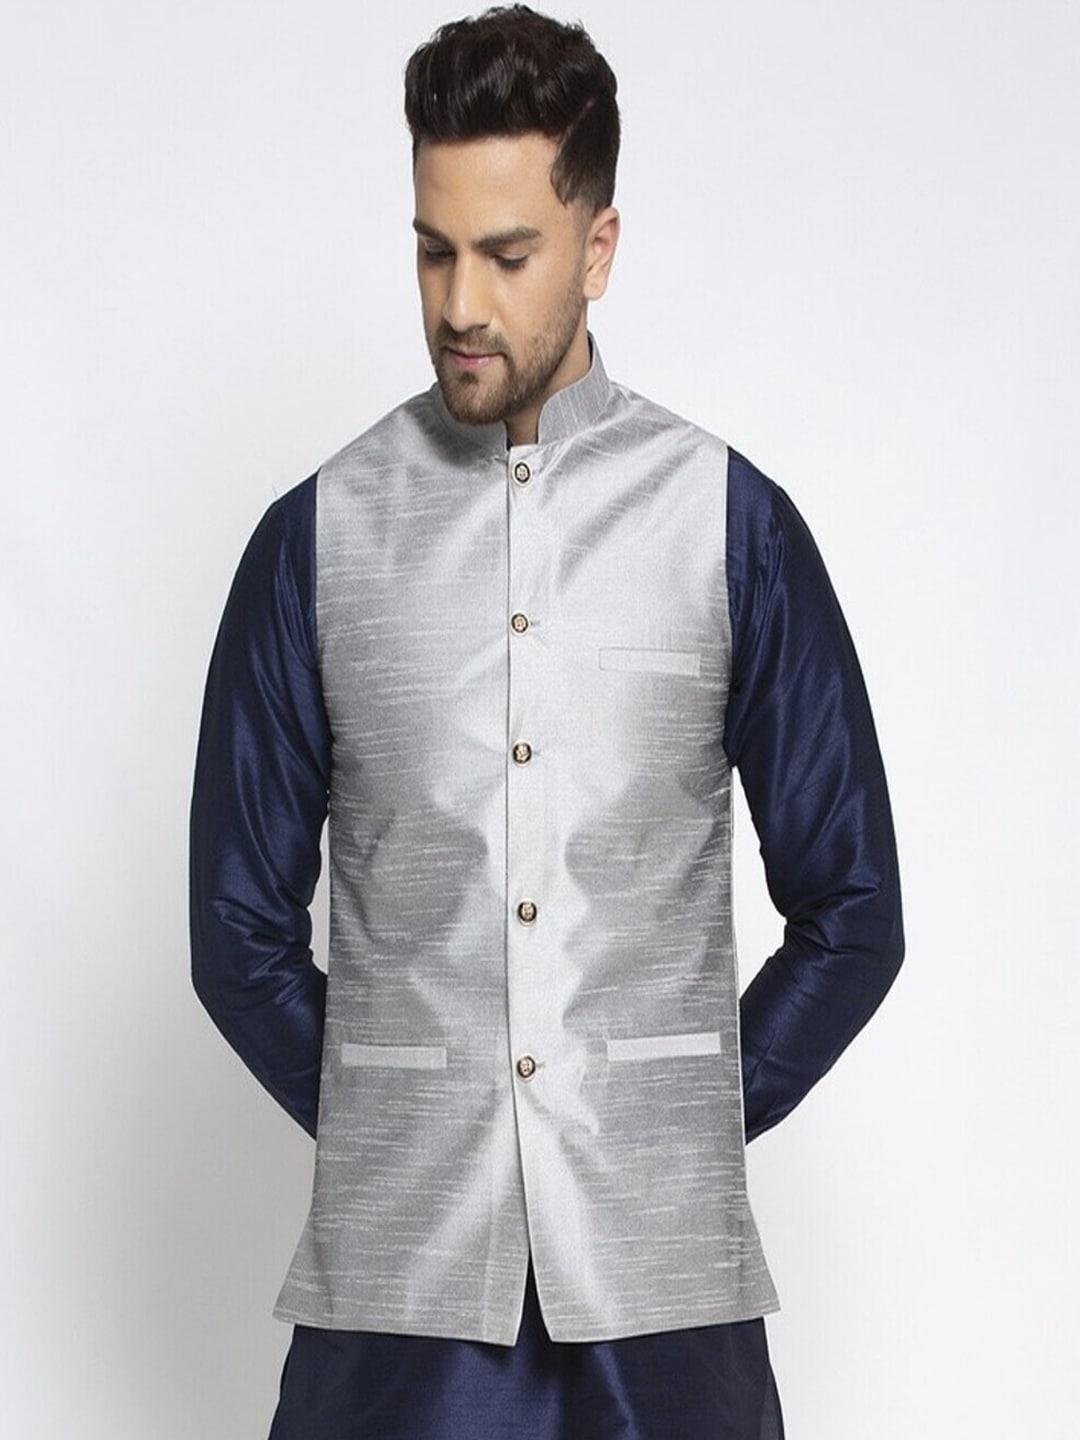 kaifoo-men-silver-colored-solid-woven-nehru-jacket